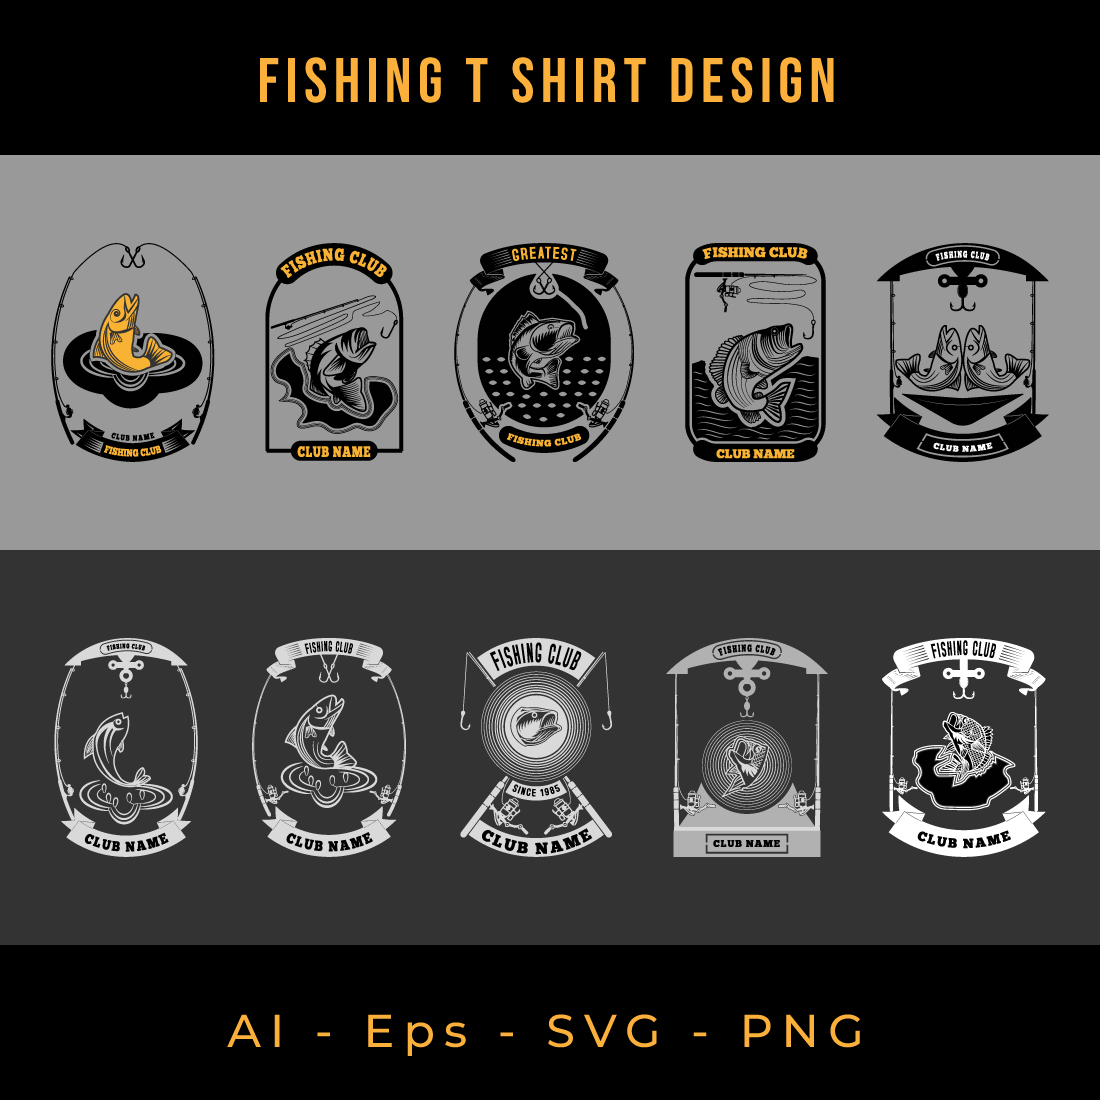 10 Fishing T Shirt Designs Bundle cover image.